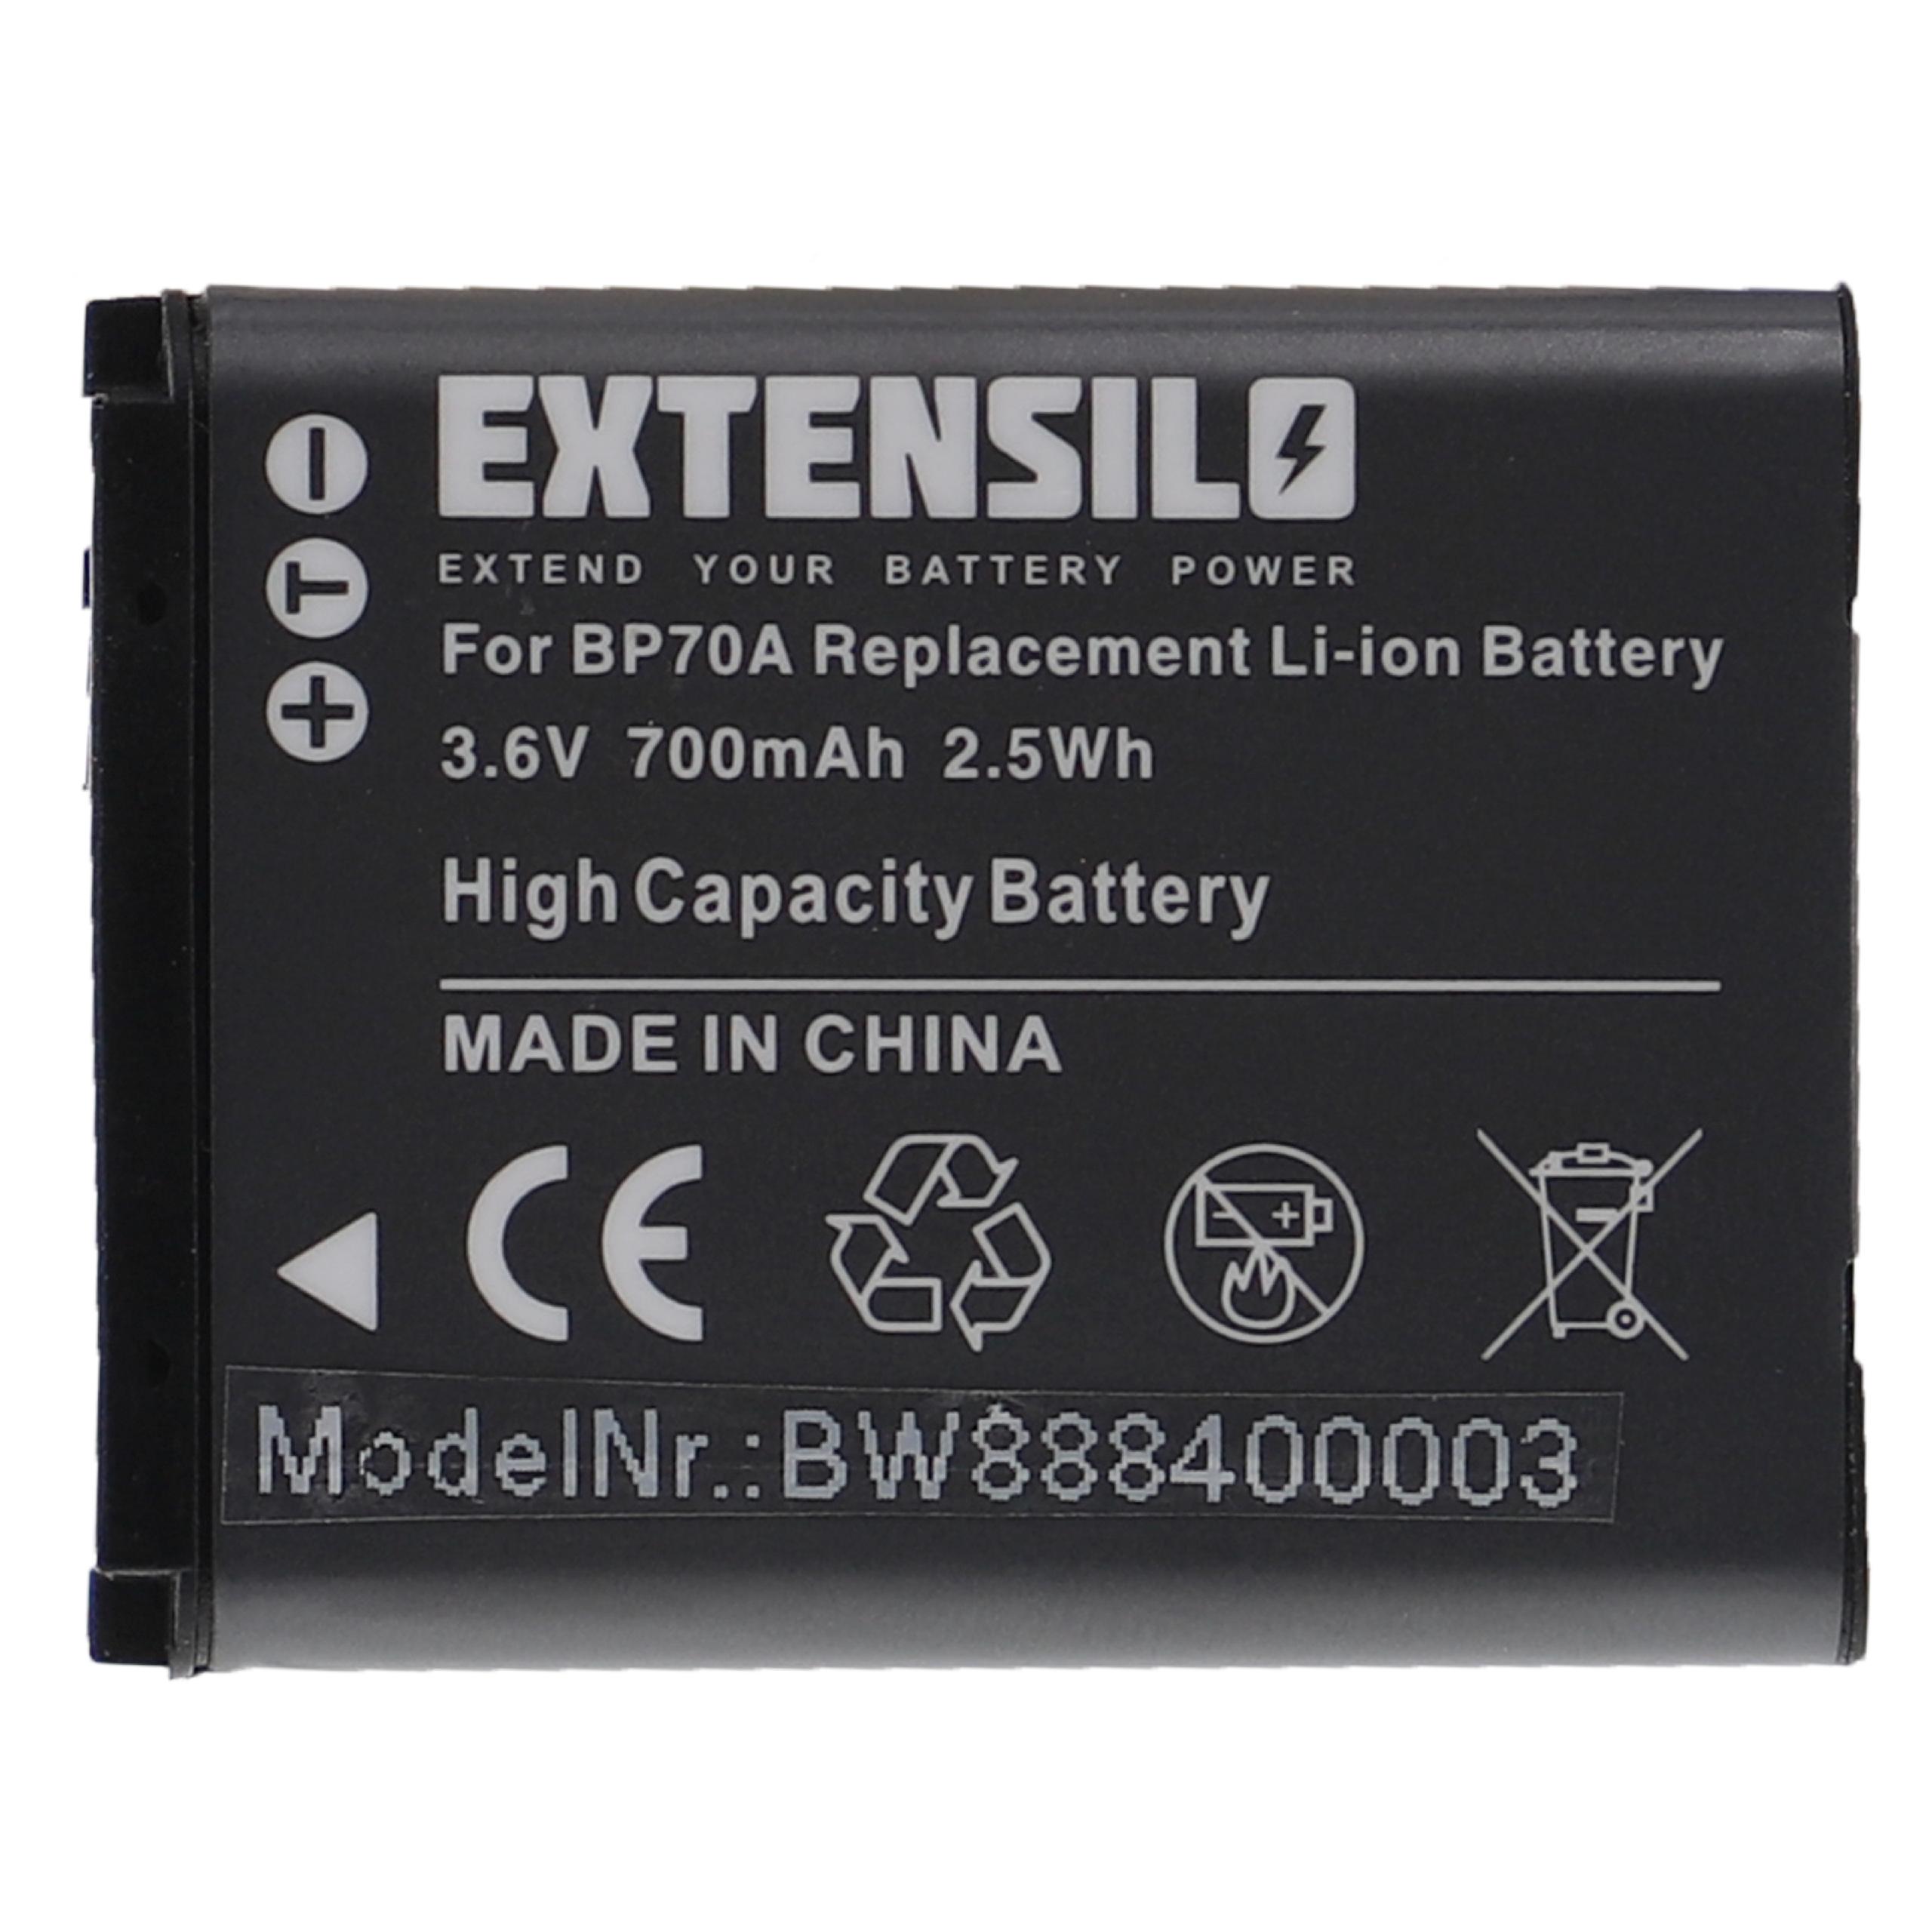 Battery Replacement for Samsung BP-70a, SLB-70A, BP70a, EA-BP70A - 700mAh, 3.6V, Li-Ion